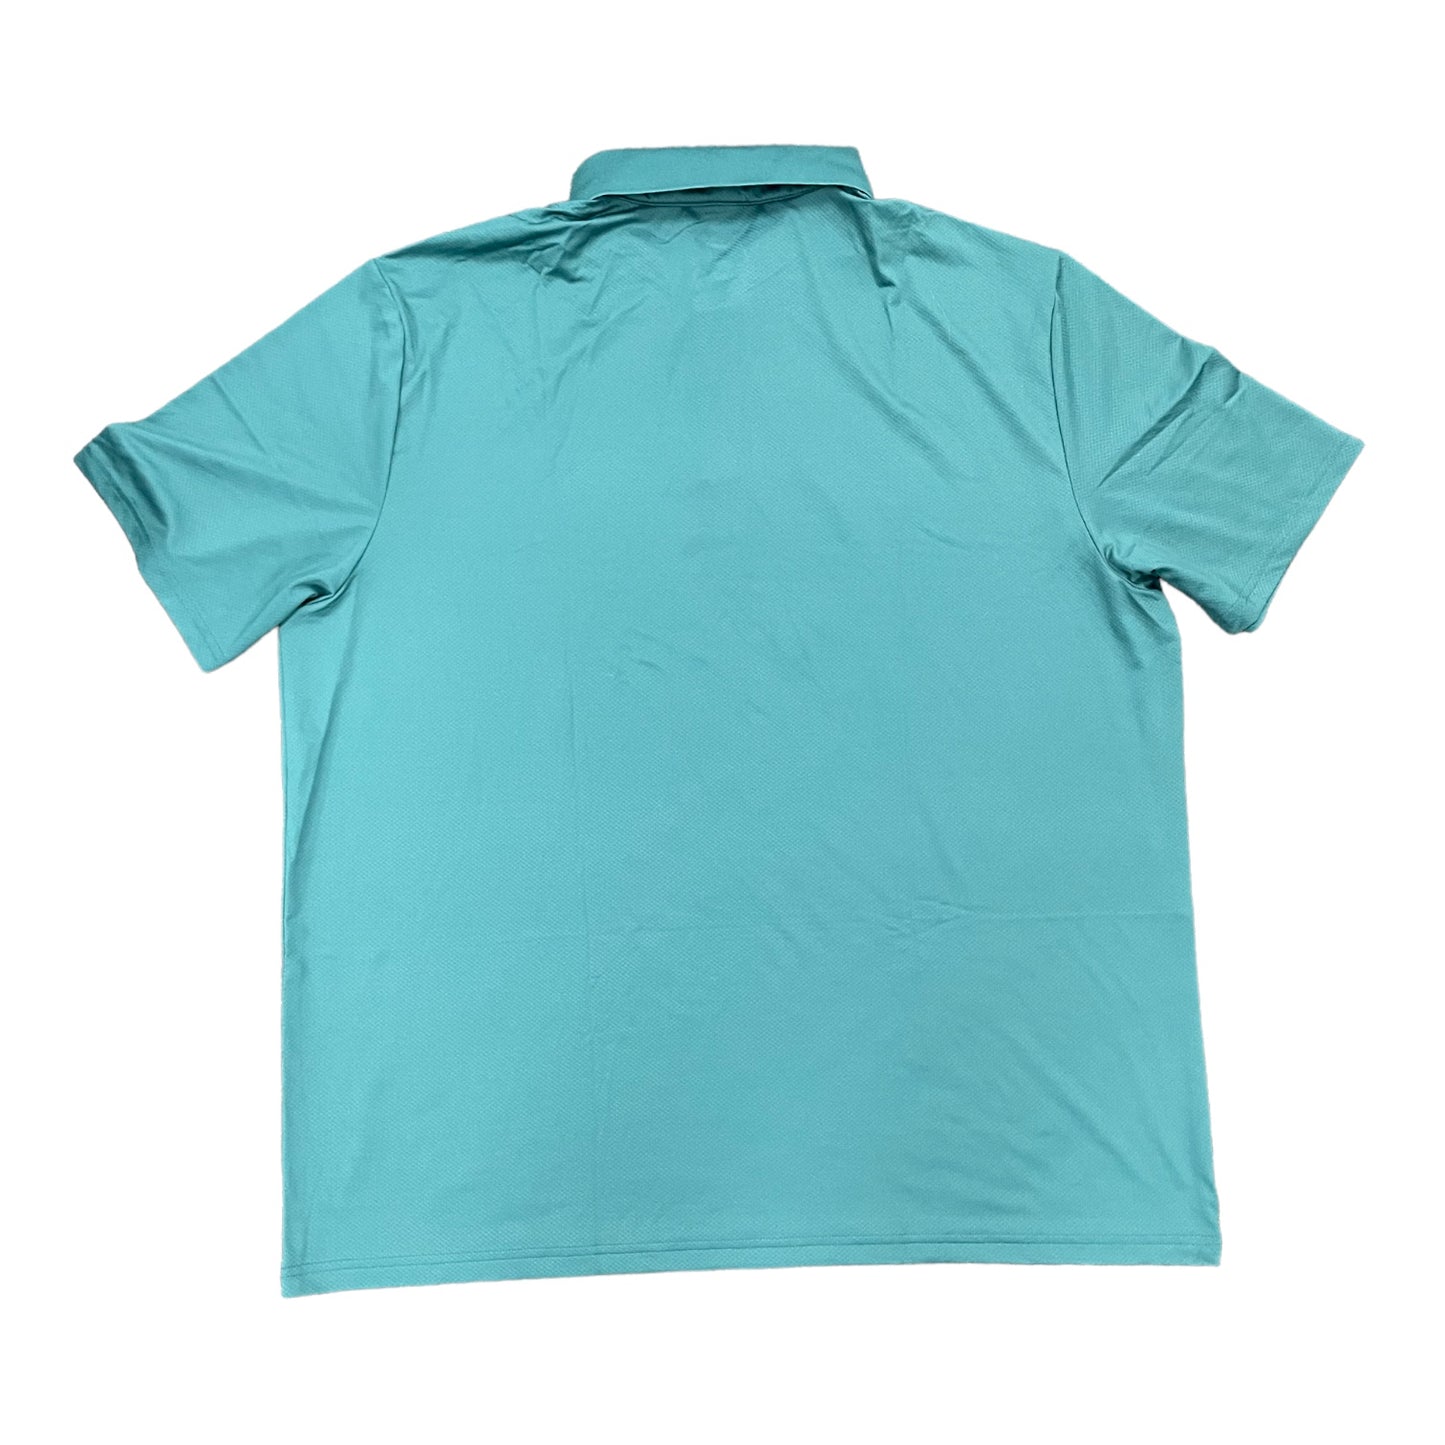 Member's Mark Men's UPF 50 Jacquard Textured Short Sleeve Performance Polo